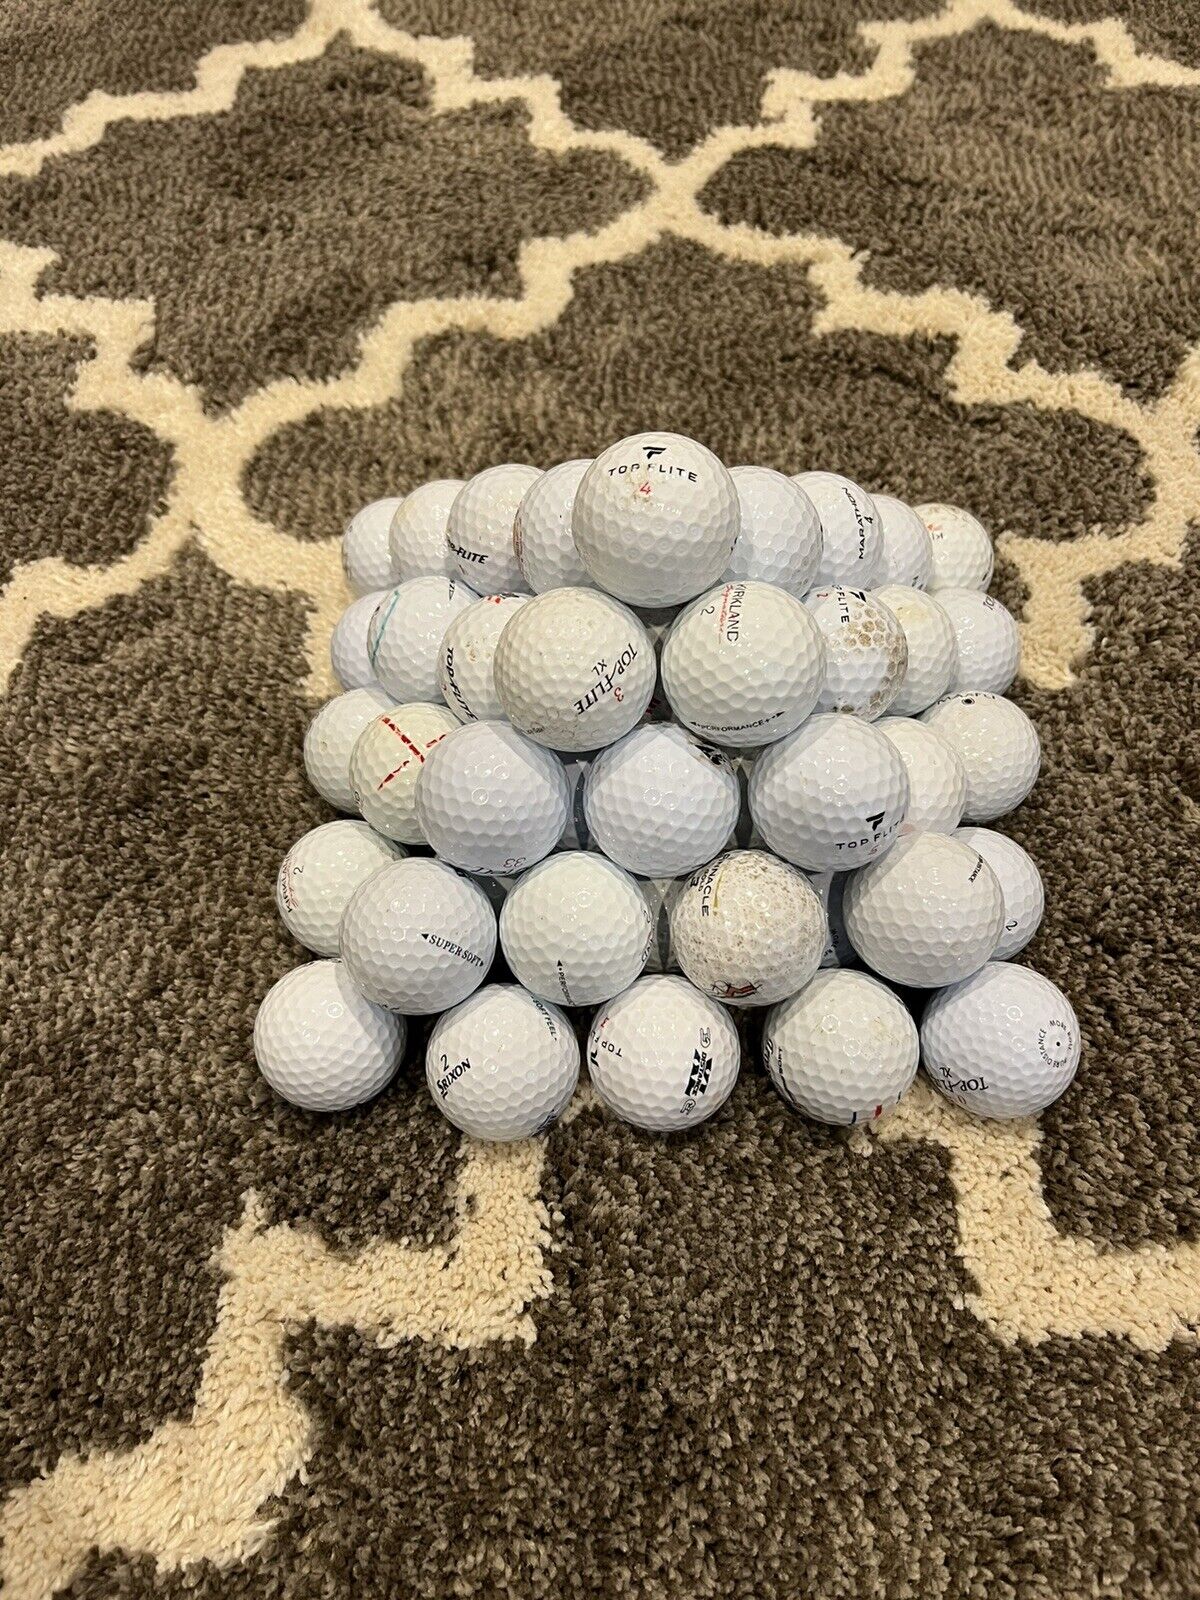 50 Used Practice Golf Balls